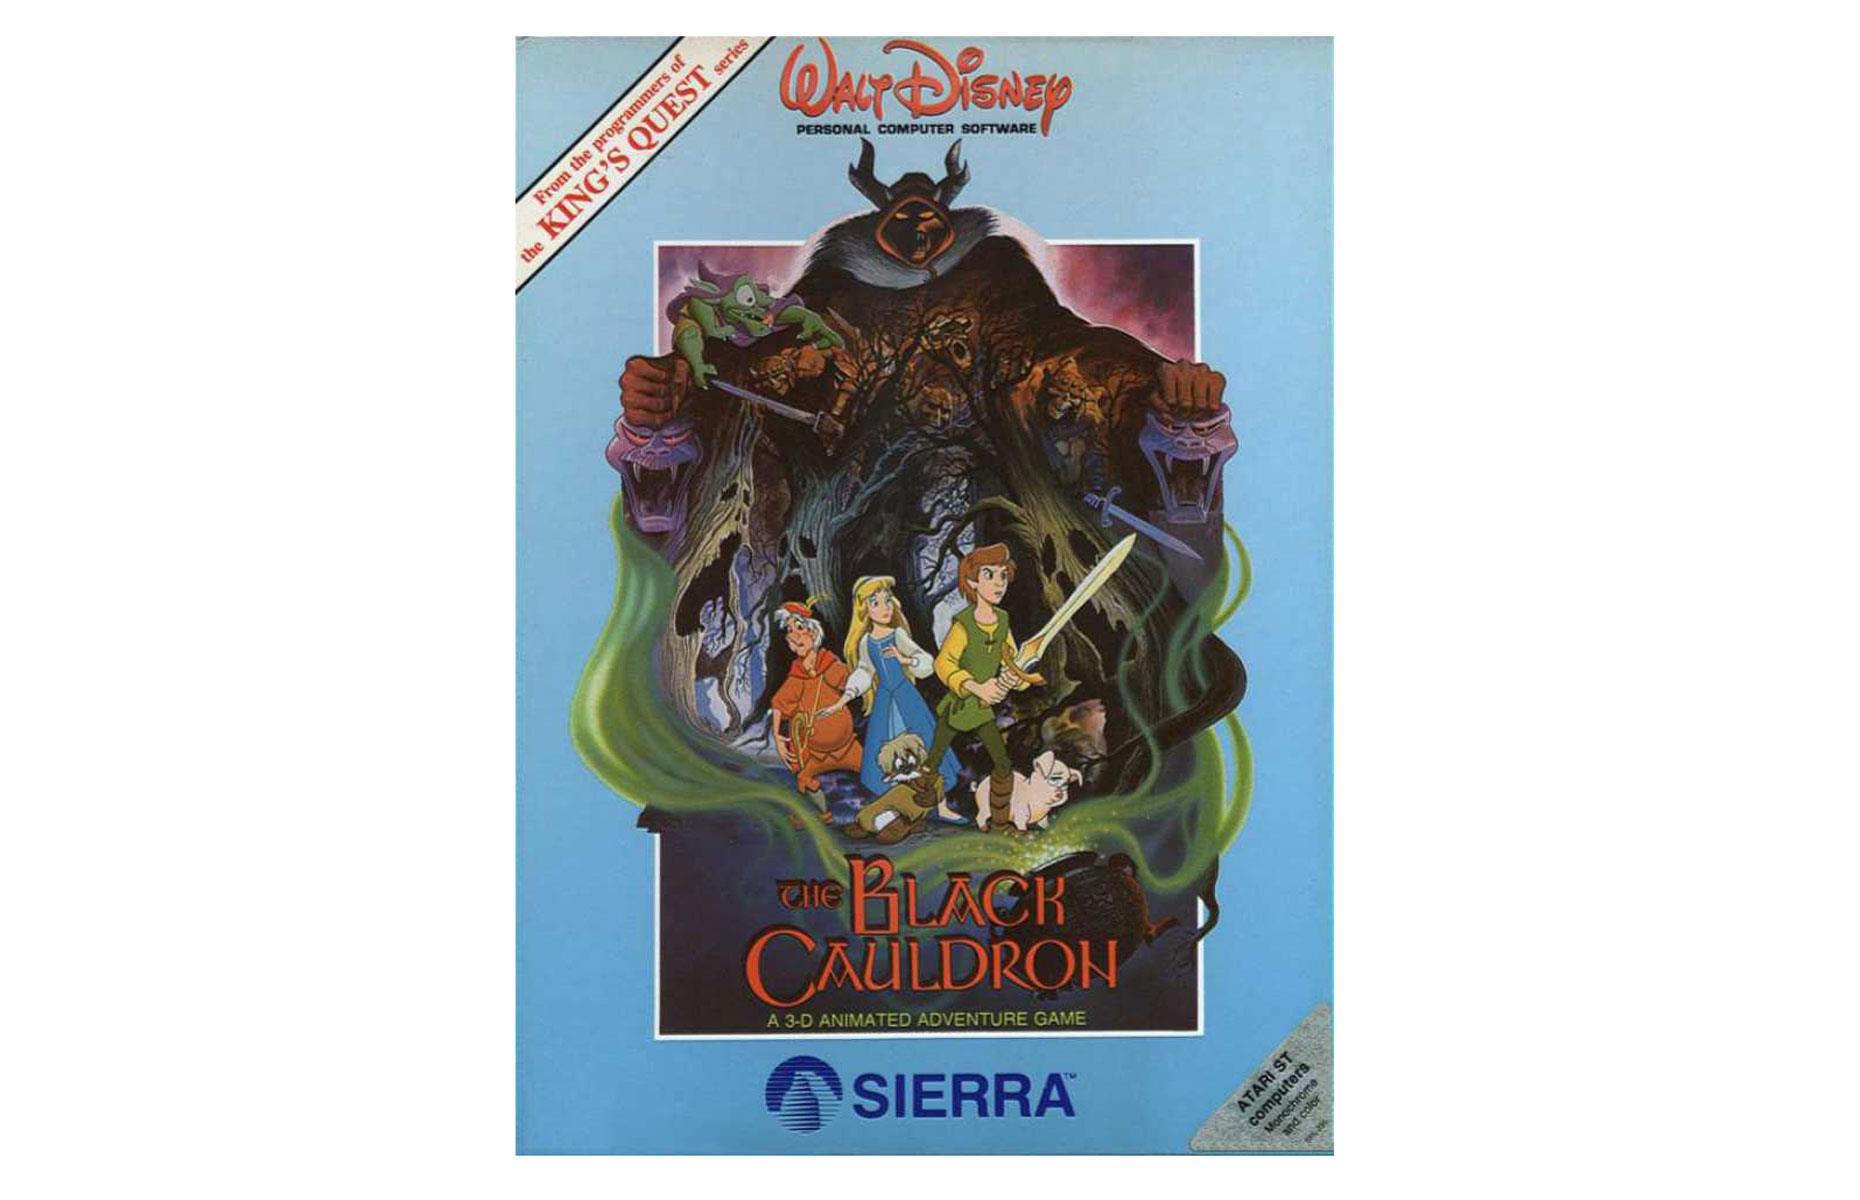 Sierra Black Cauldron PC adventure game: up to $100 (£77)